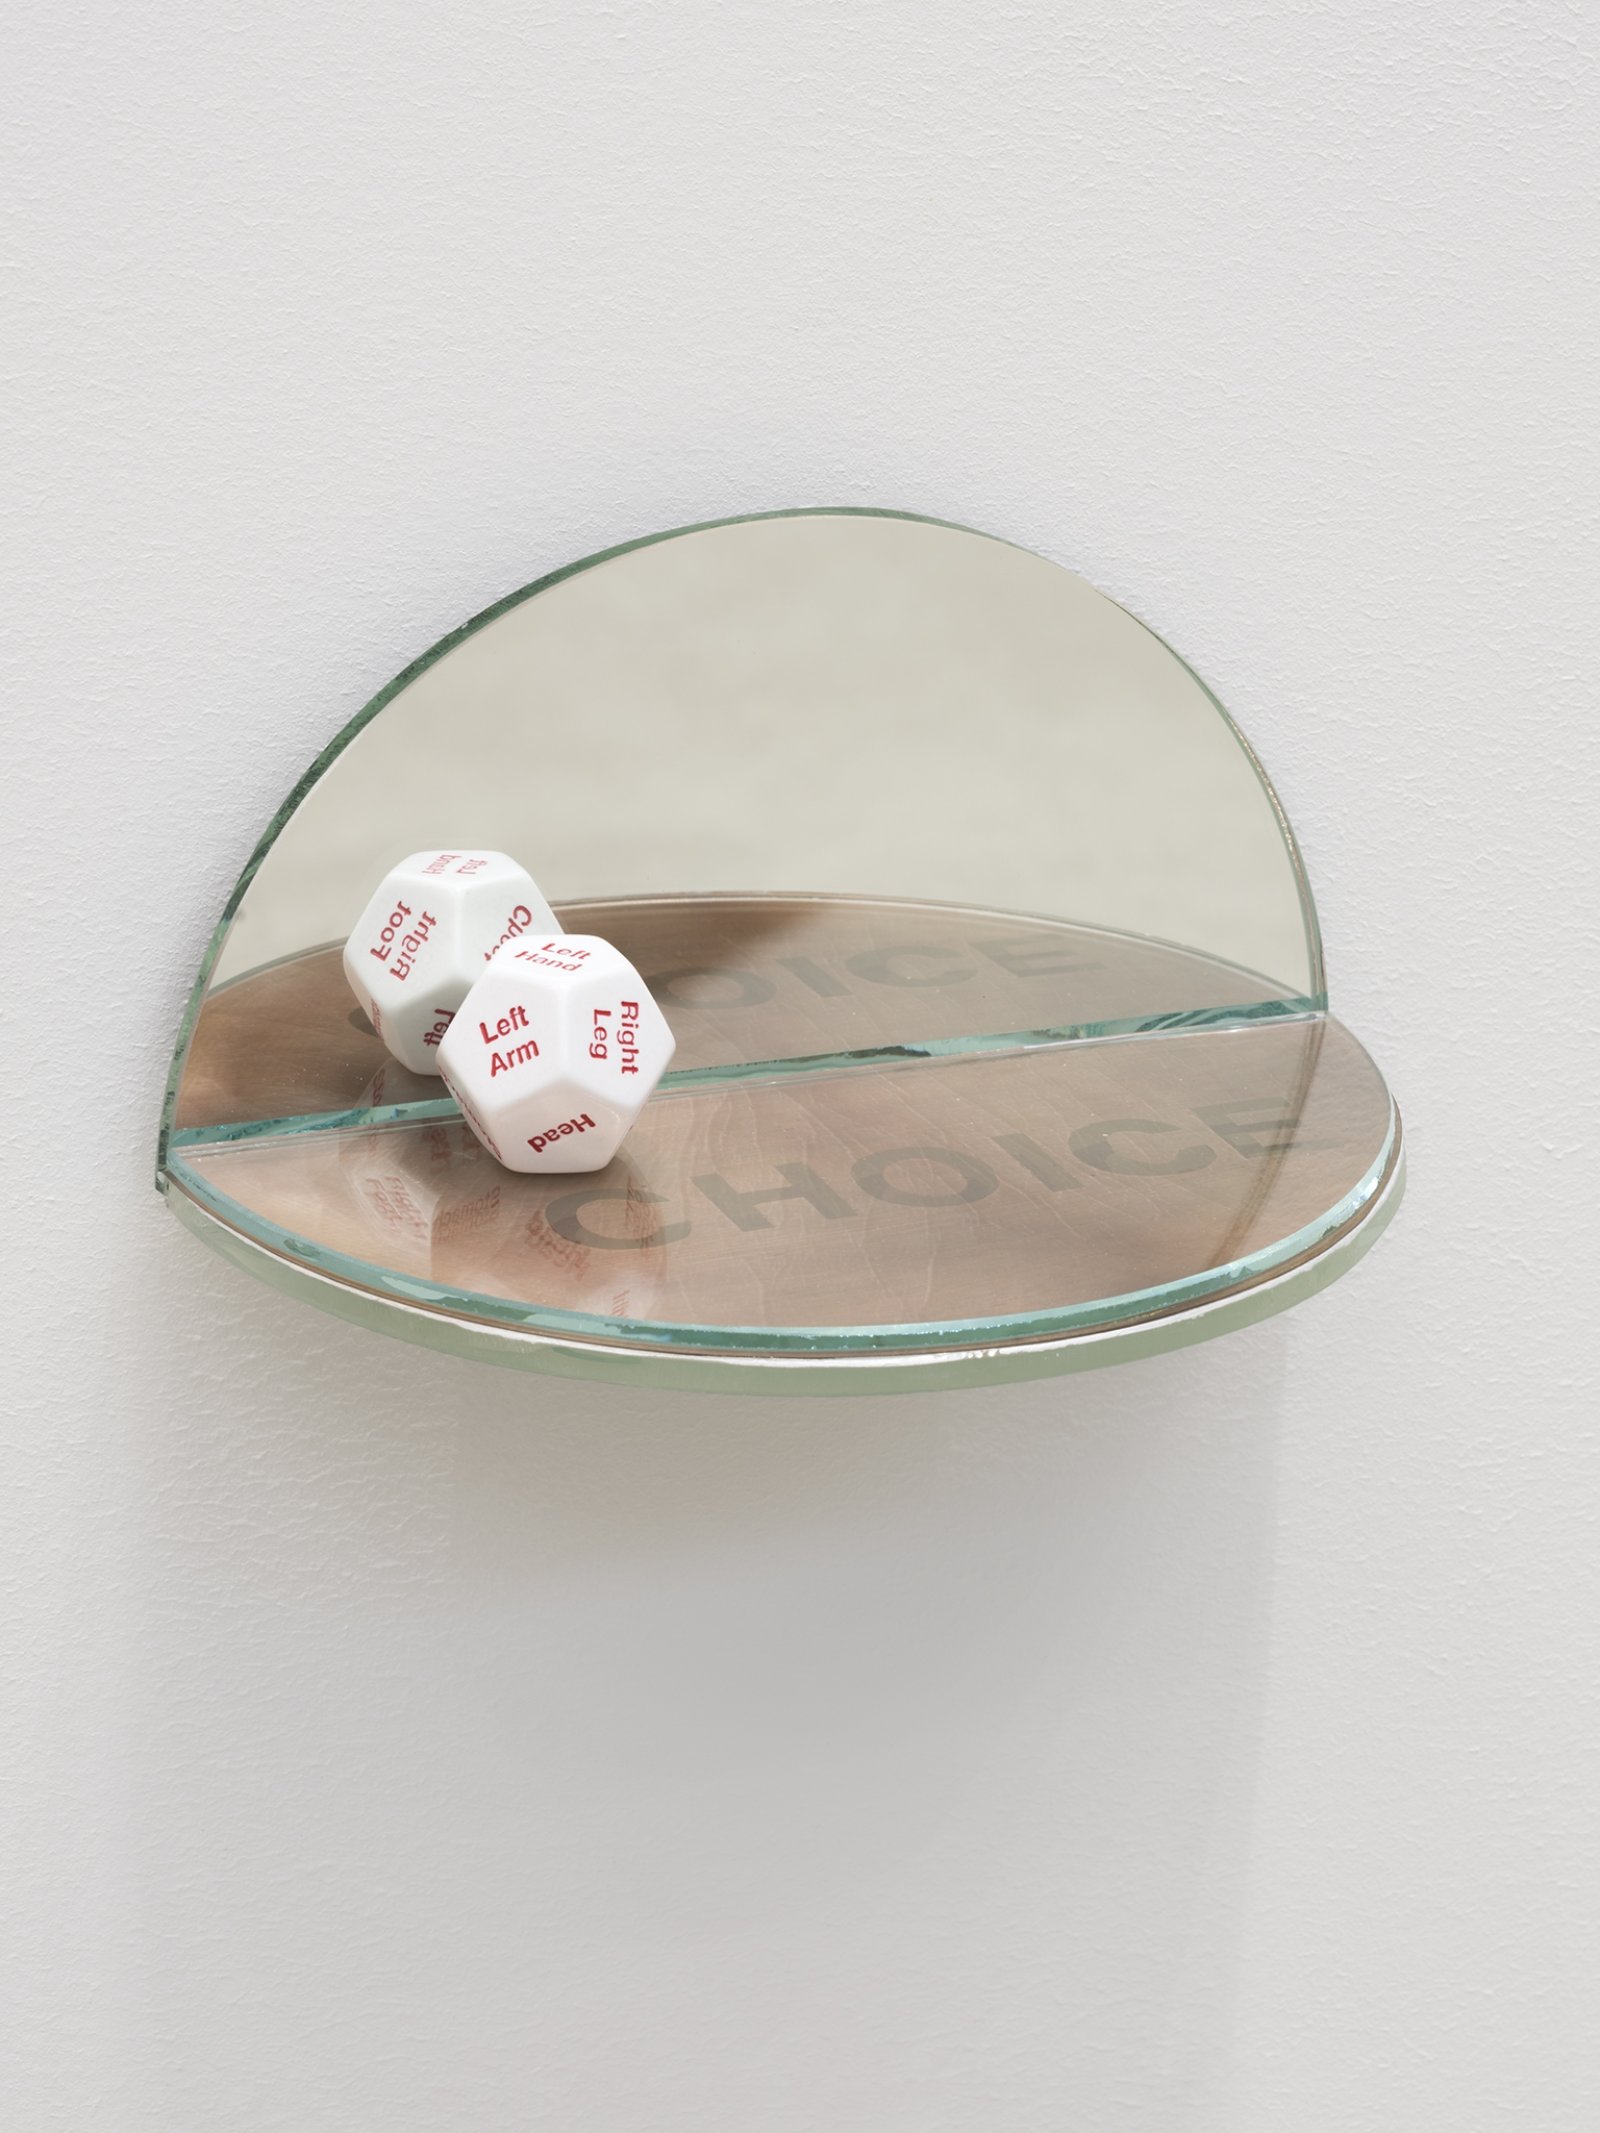 Kasper Feyrer, The Ambidextrous Universe: touching, 2018, mirror, liquid mirror, glass, fujiclear transparency, 12-sided die, 4 x 4 x 7 in. (9 x 9 x 18 cm)